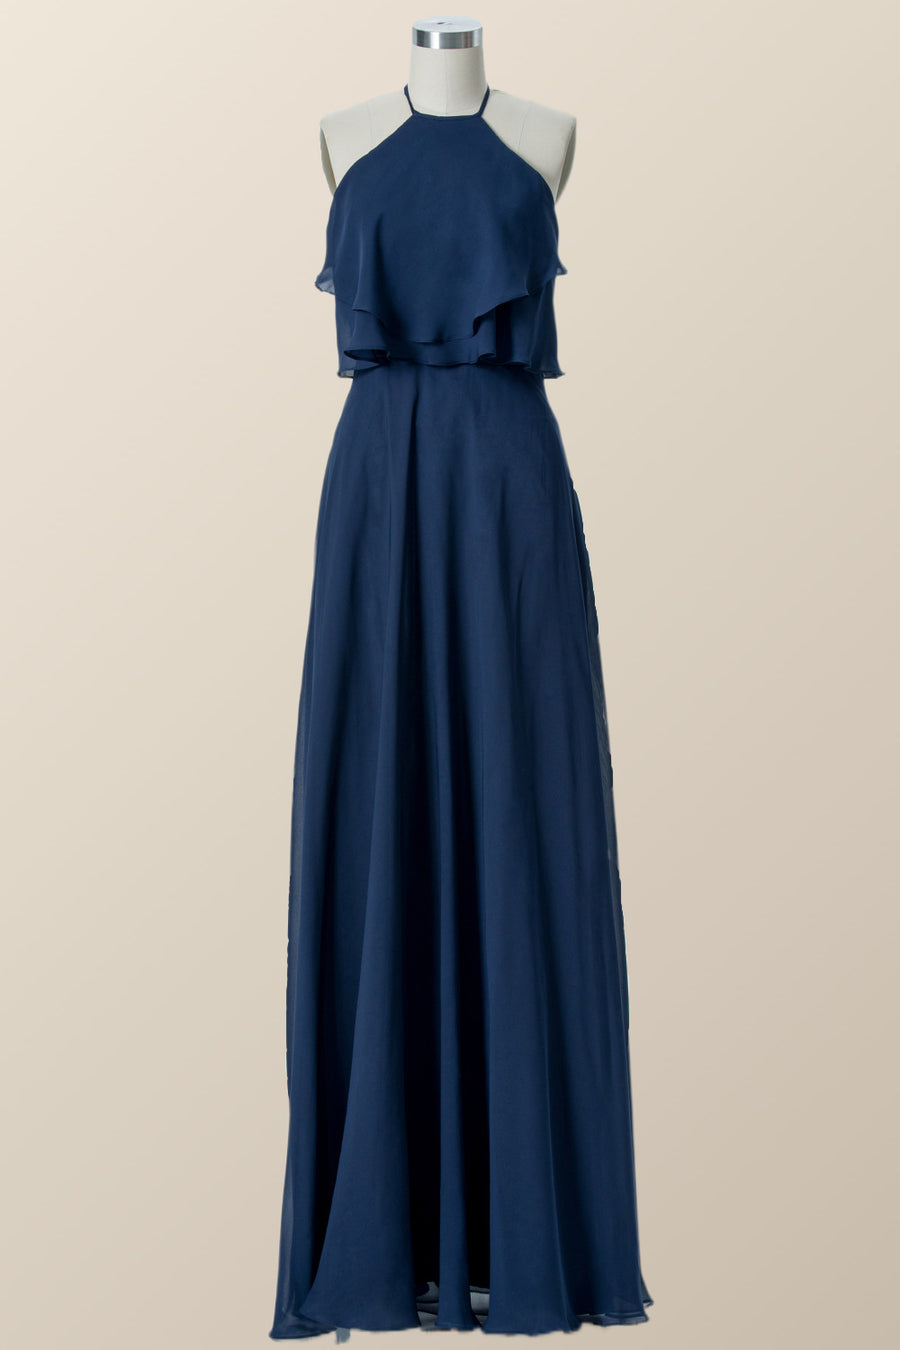 Halter Navy Blue Chiffon Long Bridesmaid Dress